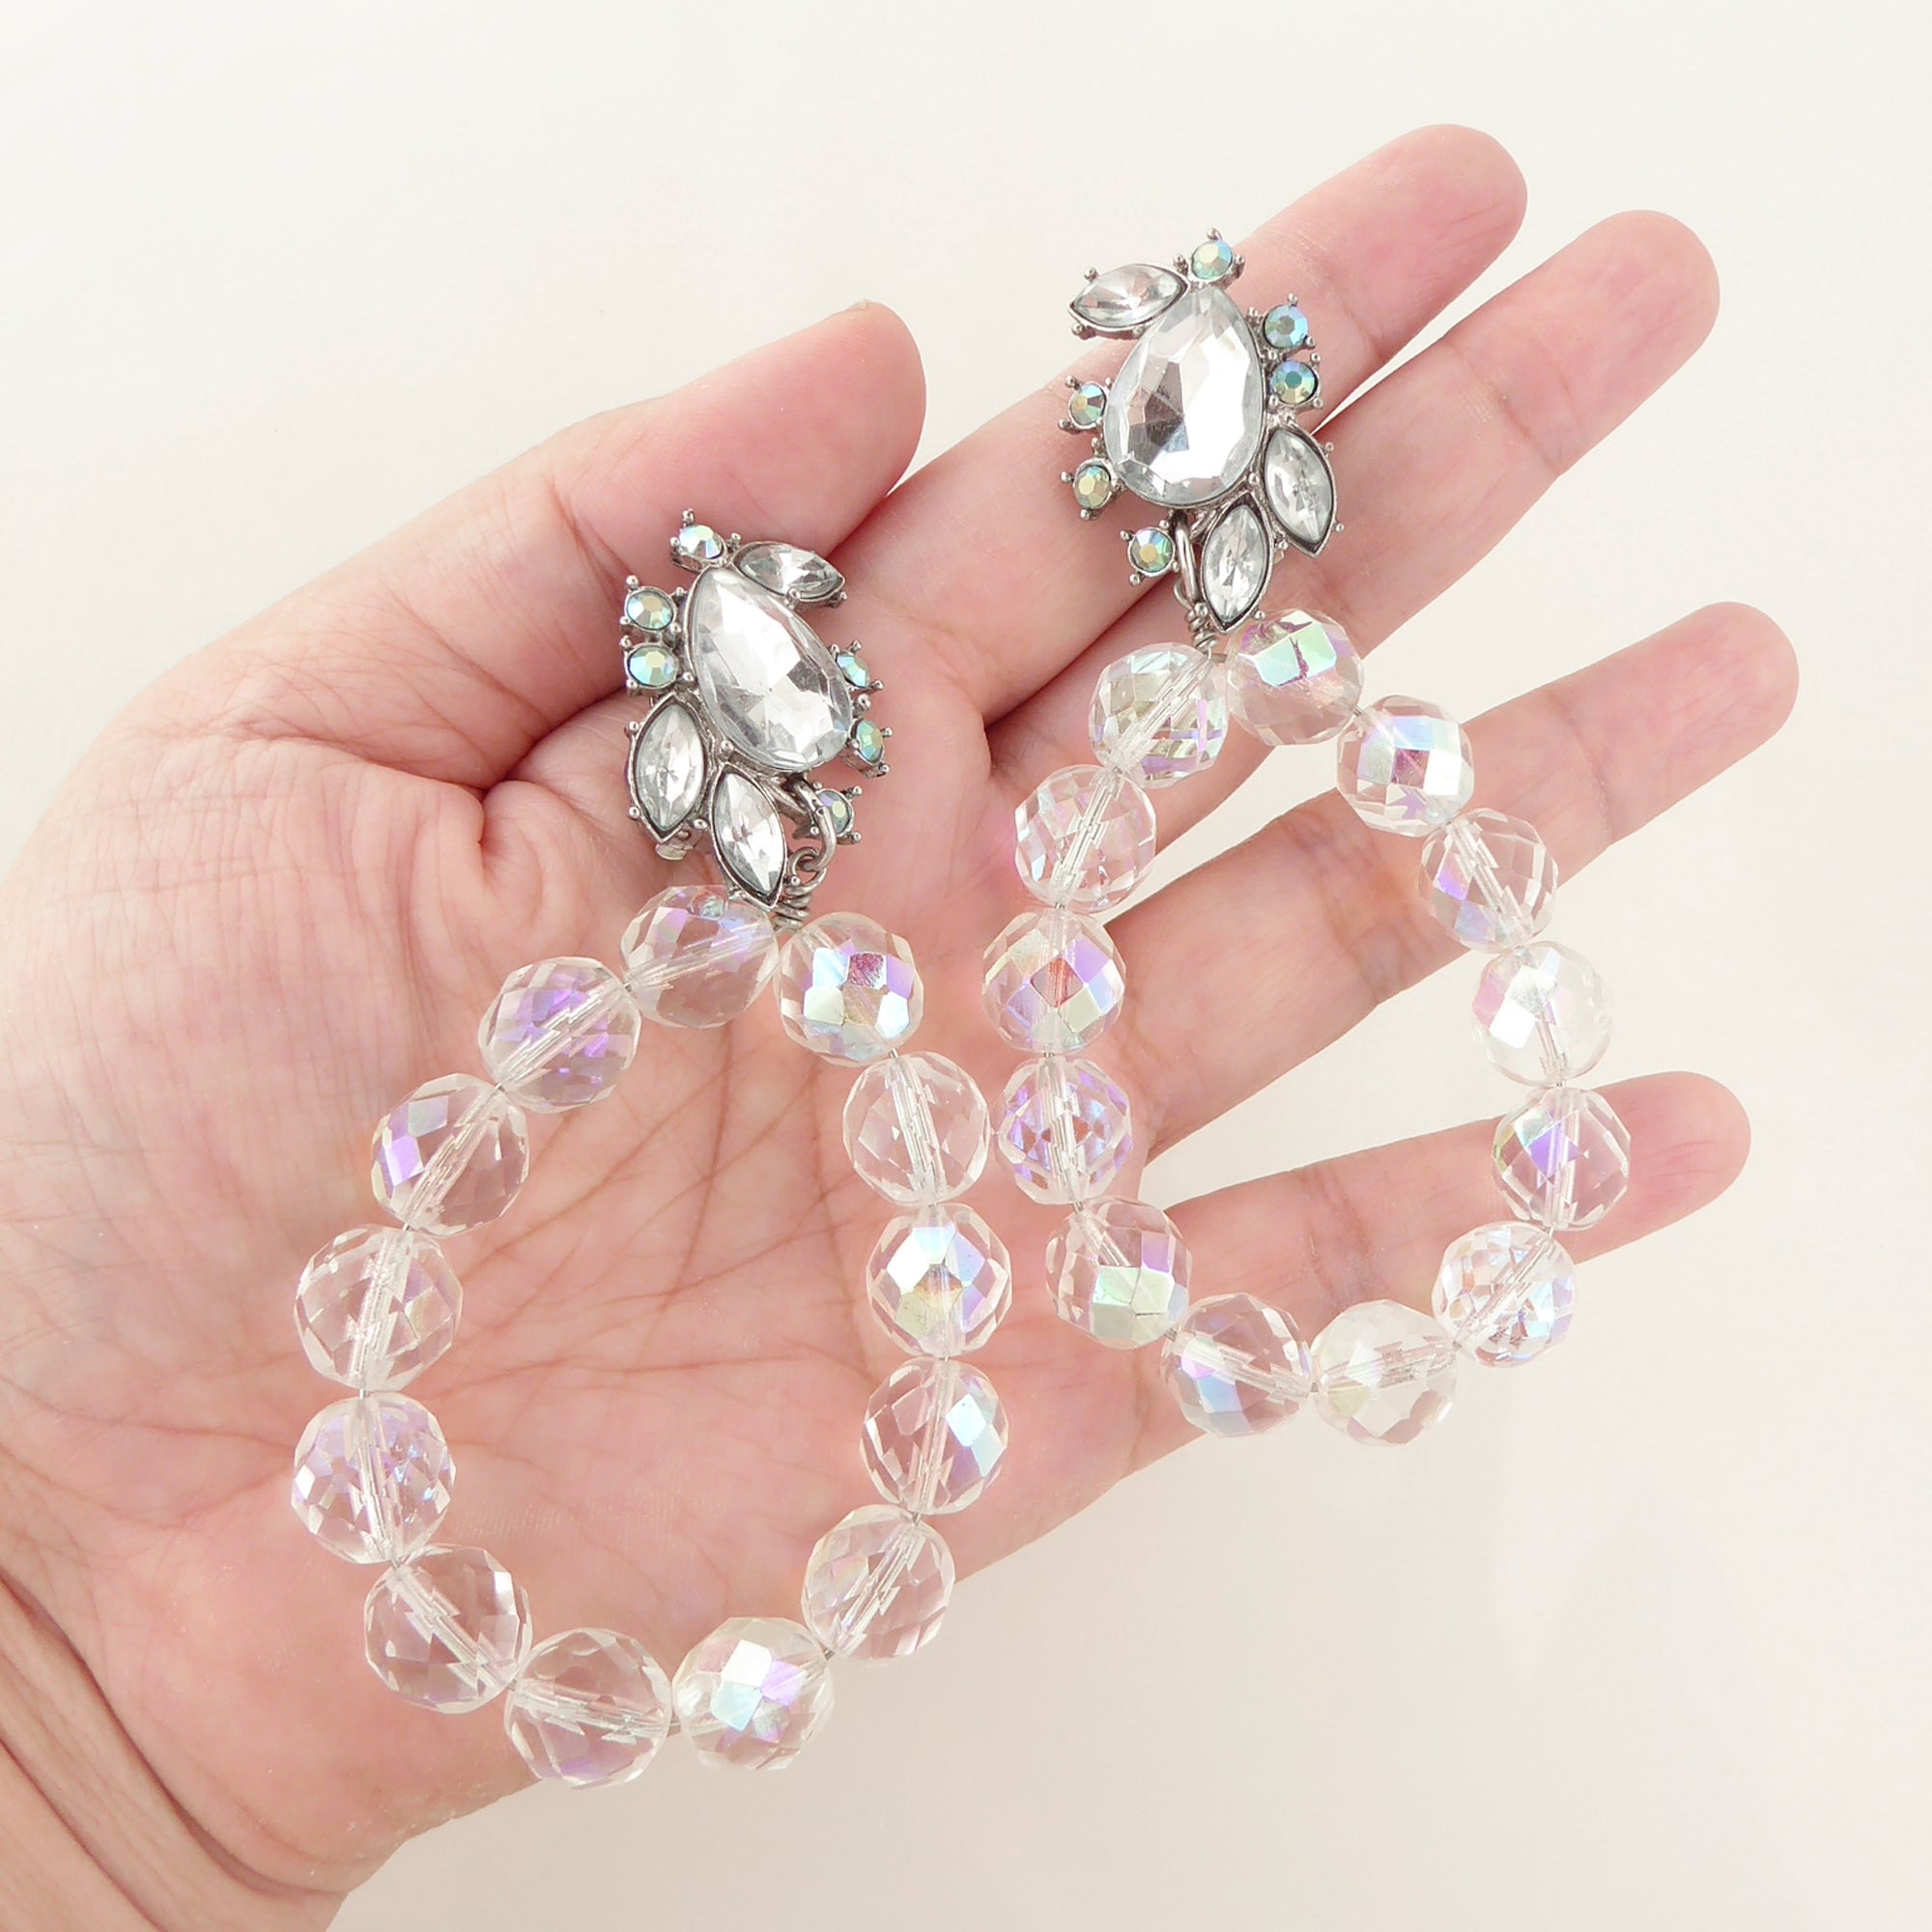 Iridescent glass teardrop earrings by Jenny Dayco 5